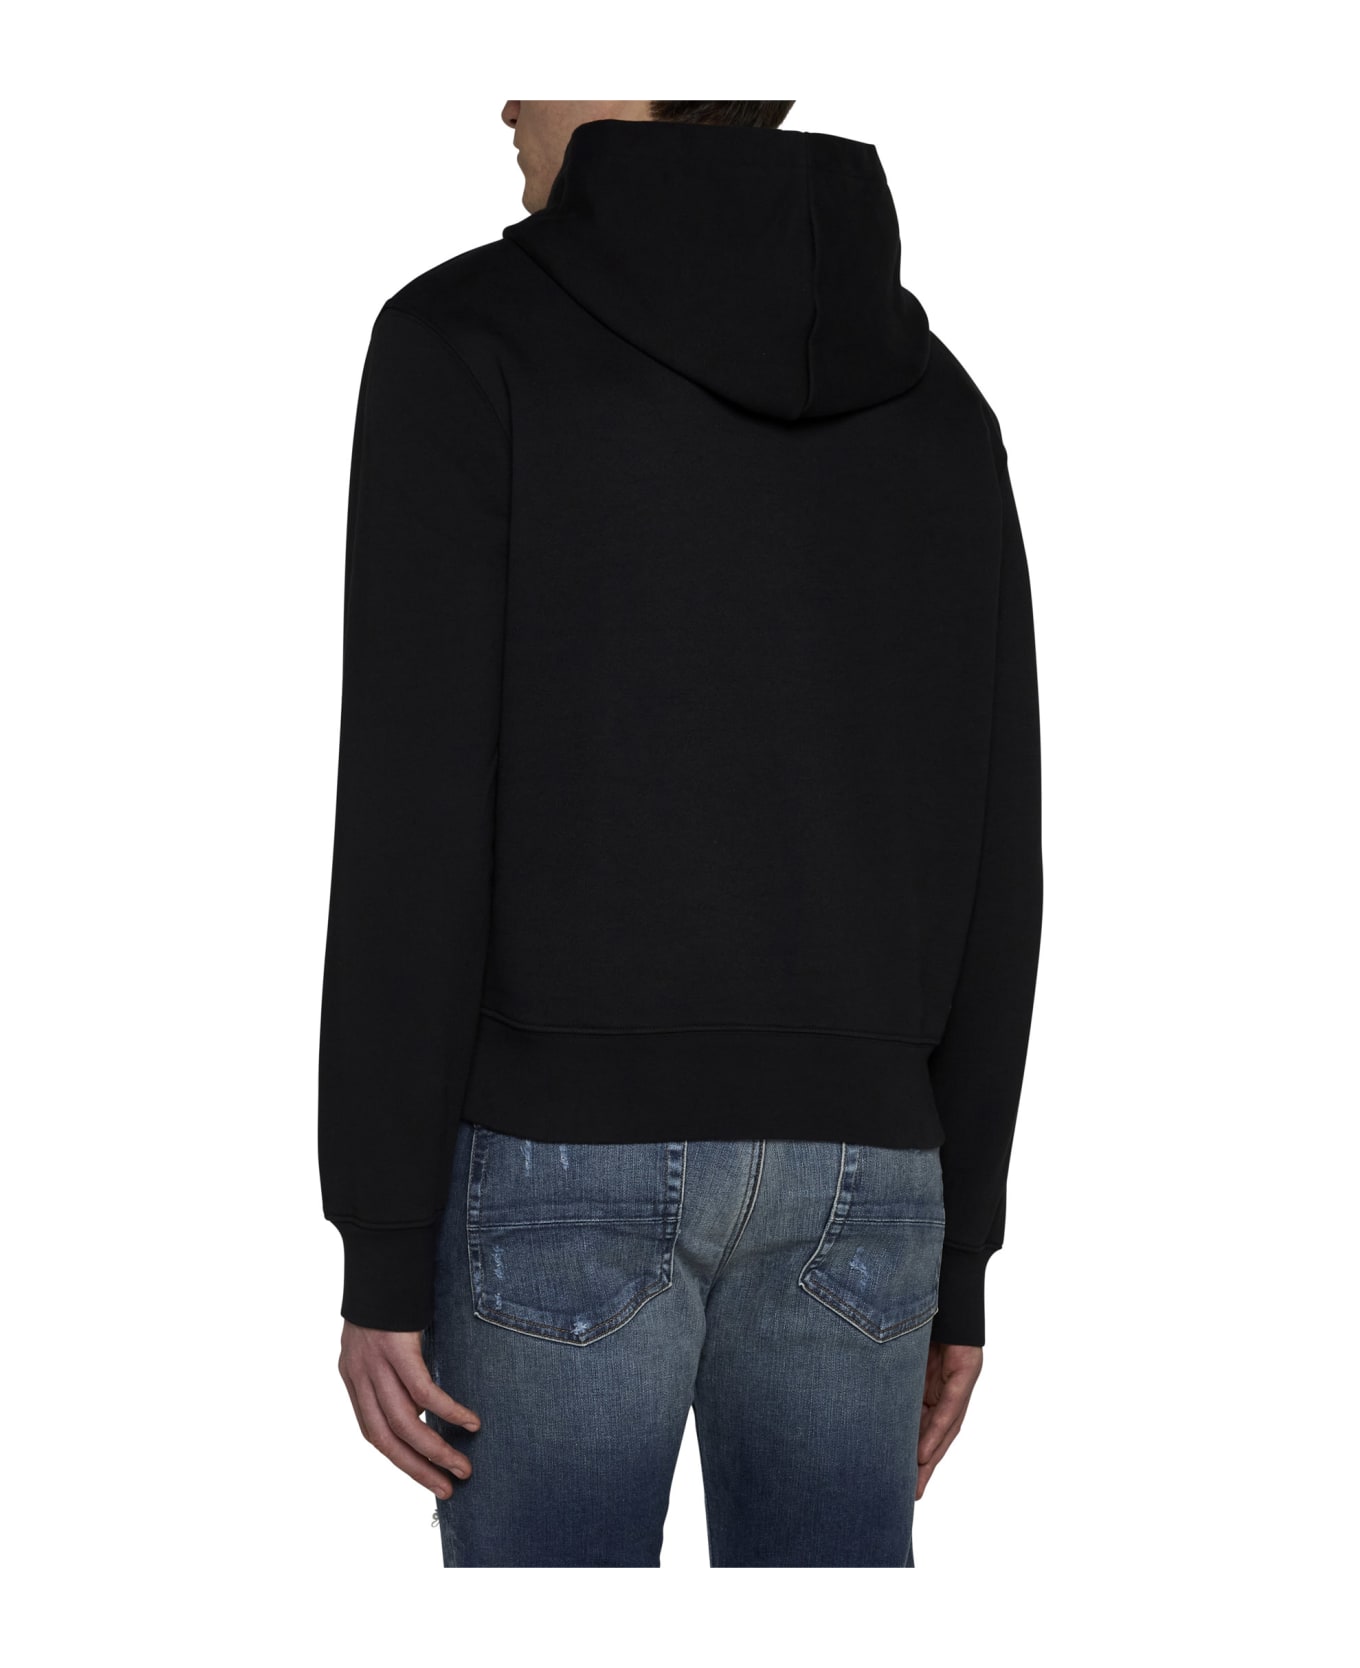 AMIRI Sweater - Black